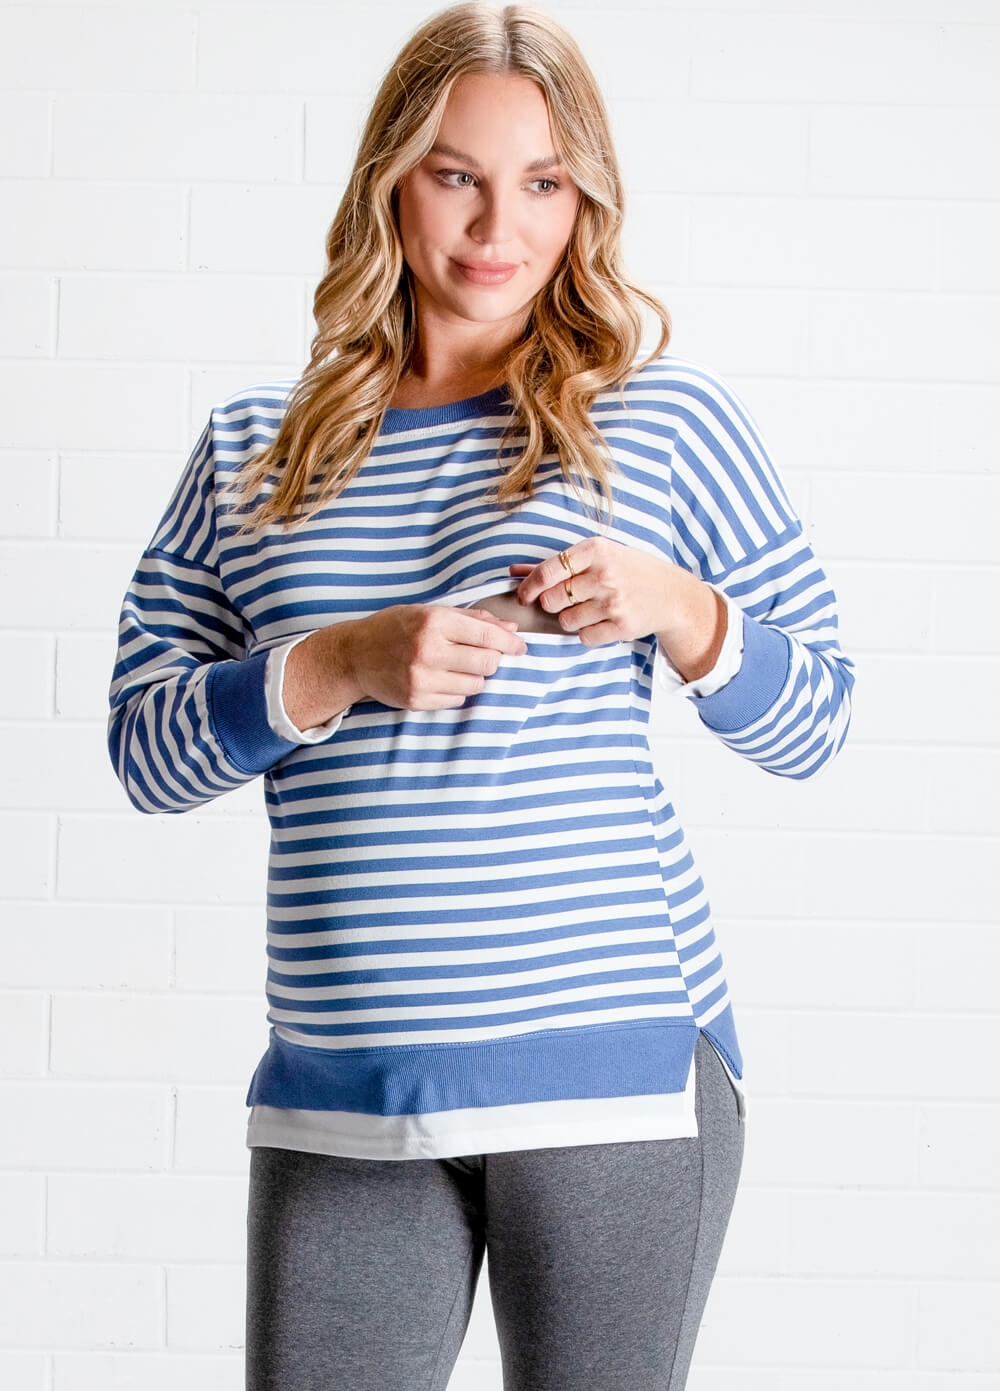 Lait & Co - Alodie Nursing Sweater in Blue Stripes | Queen Bee